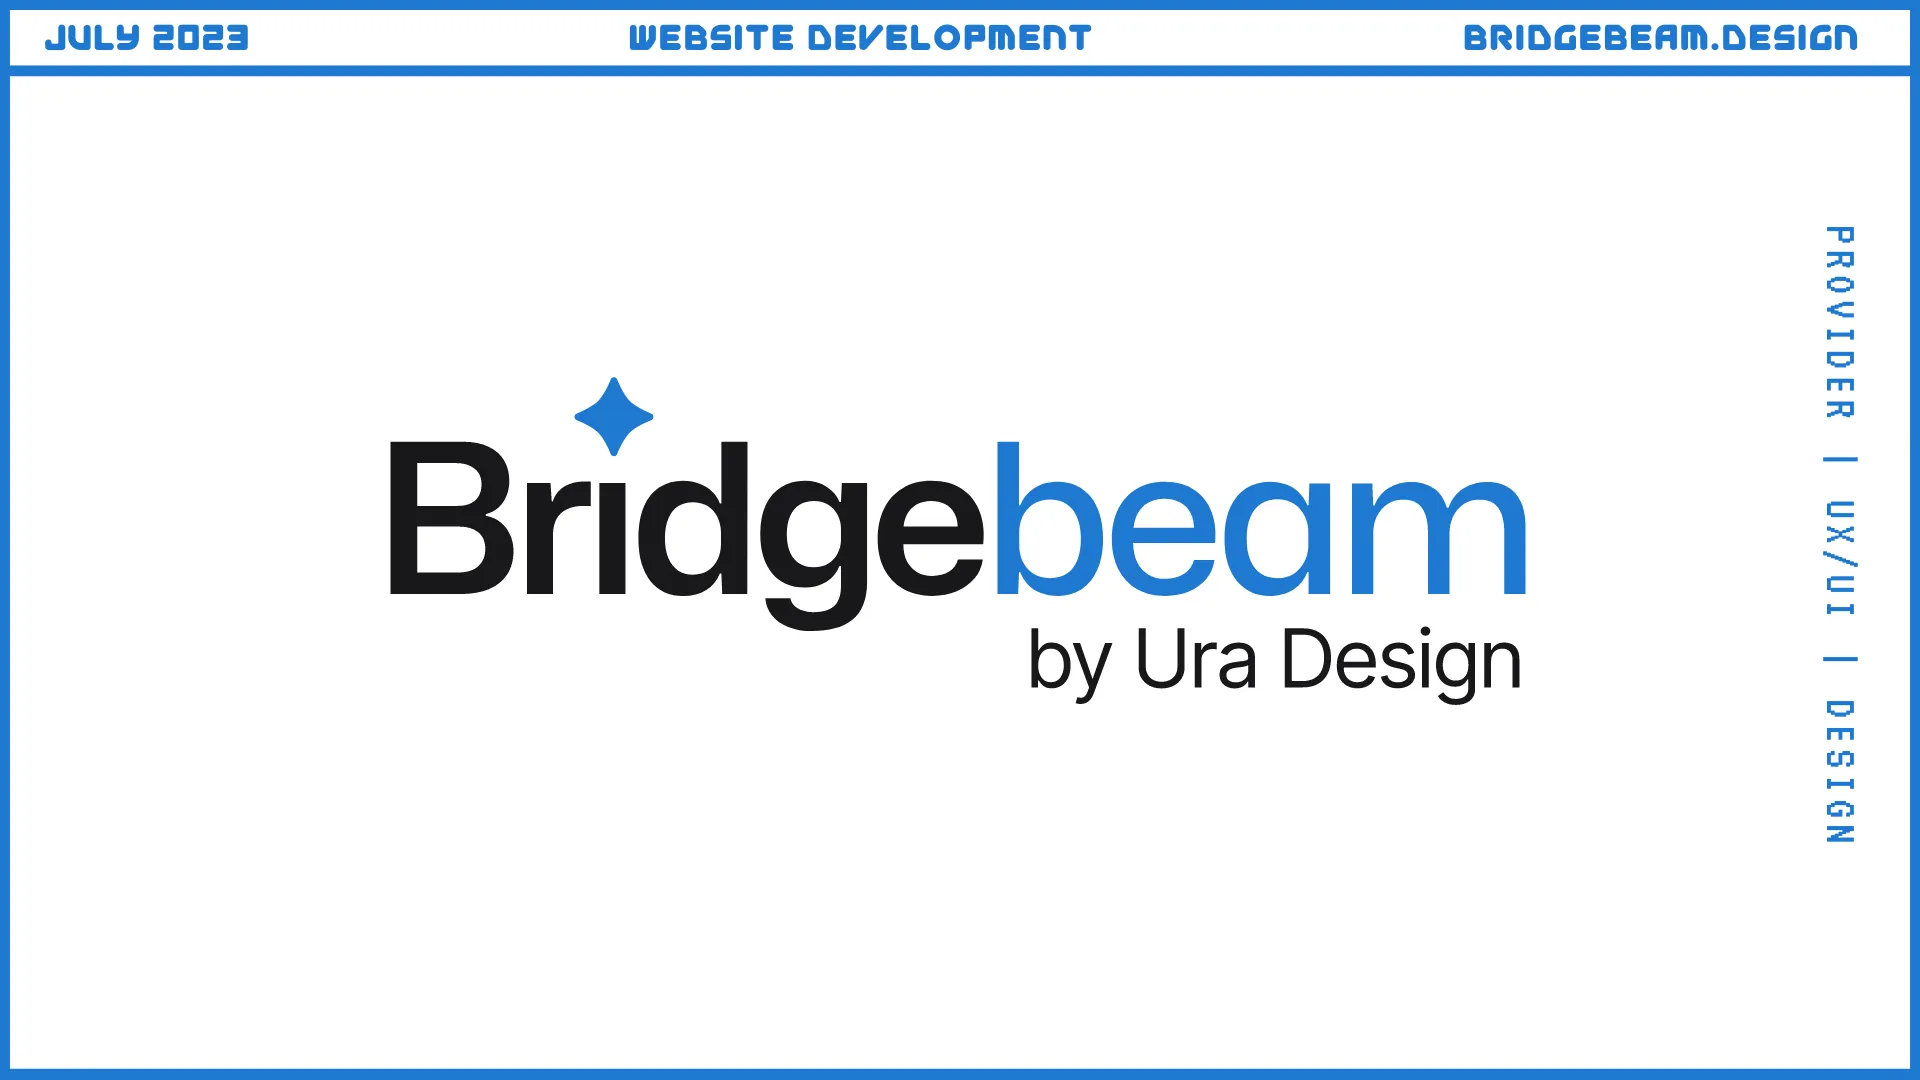 Bridgebeam